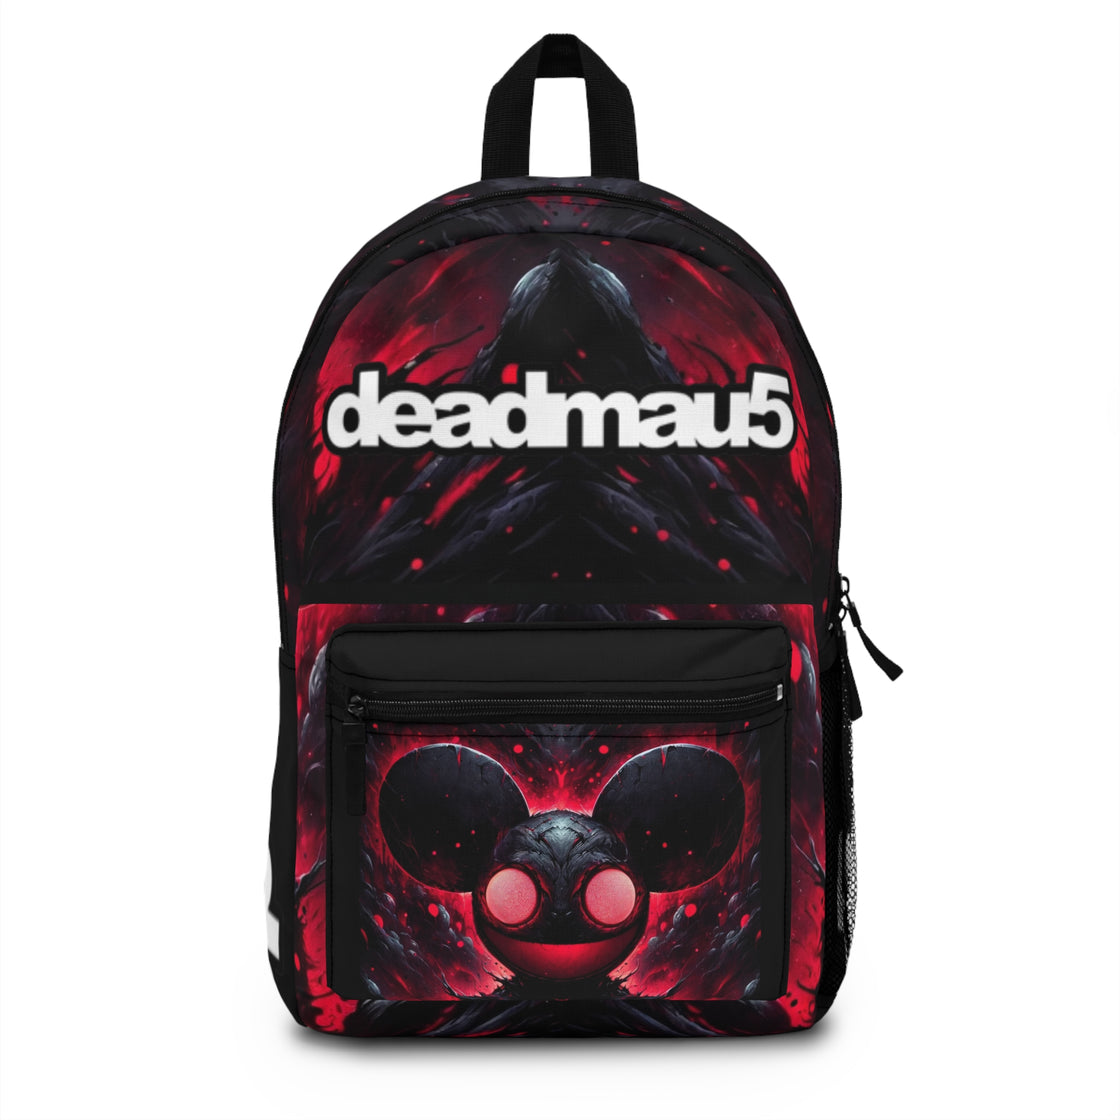 Deadmau5 Back Pack